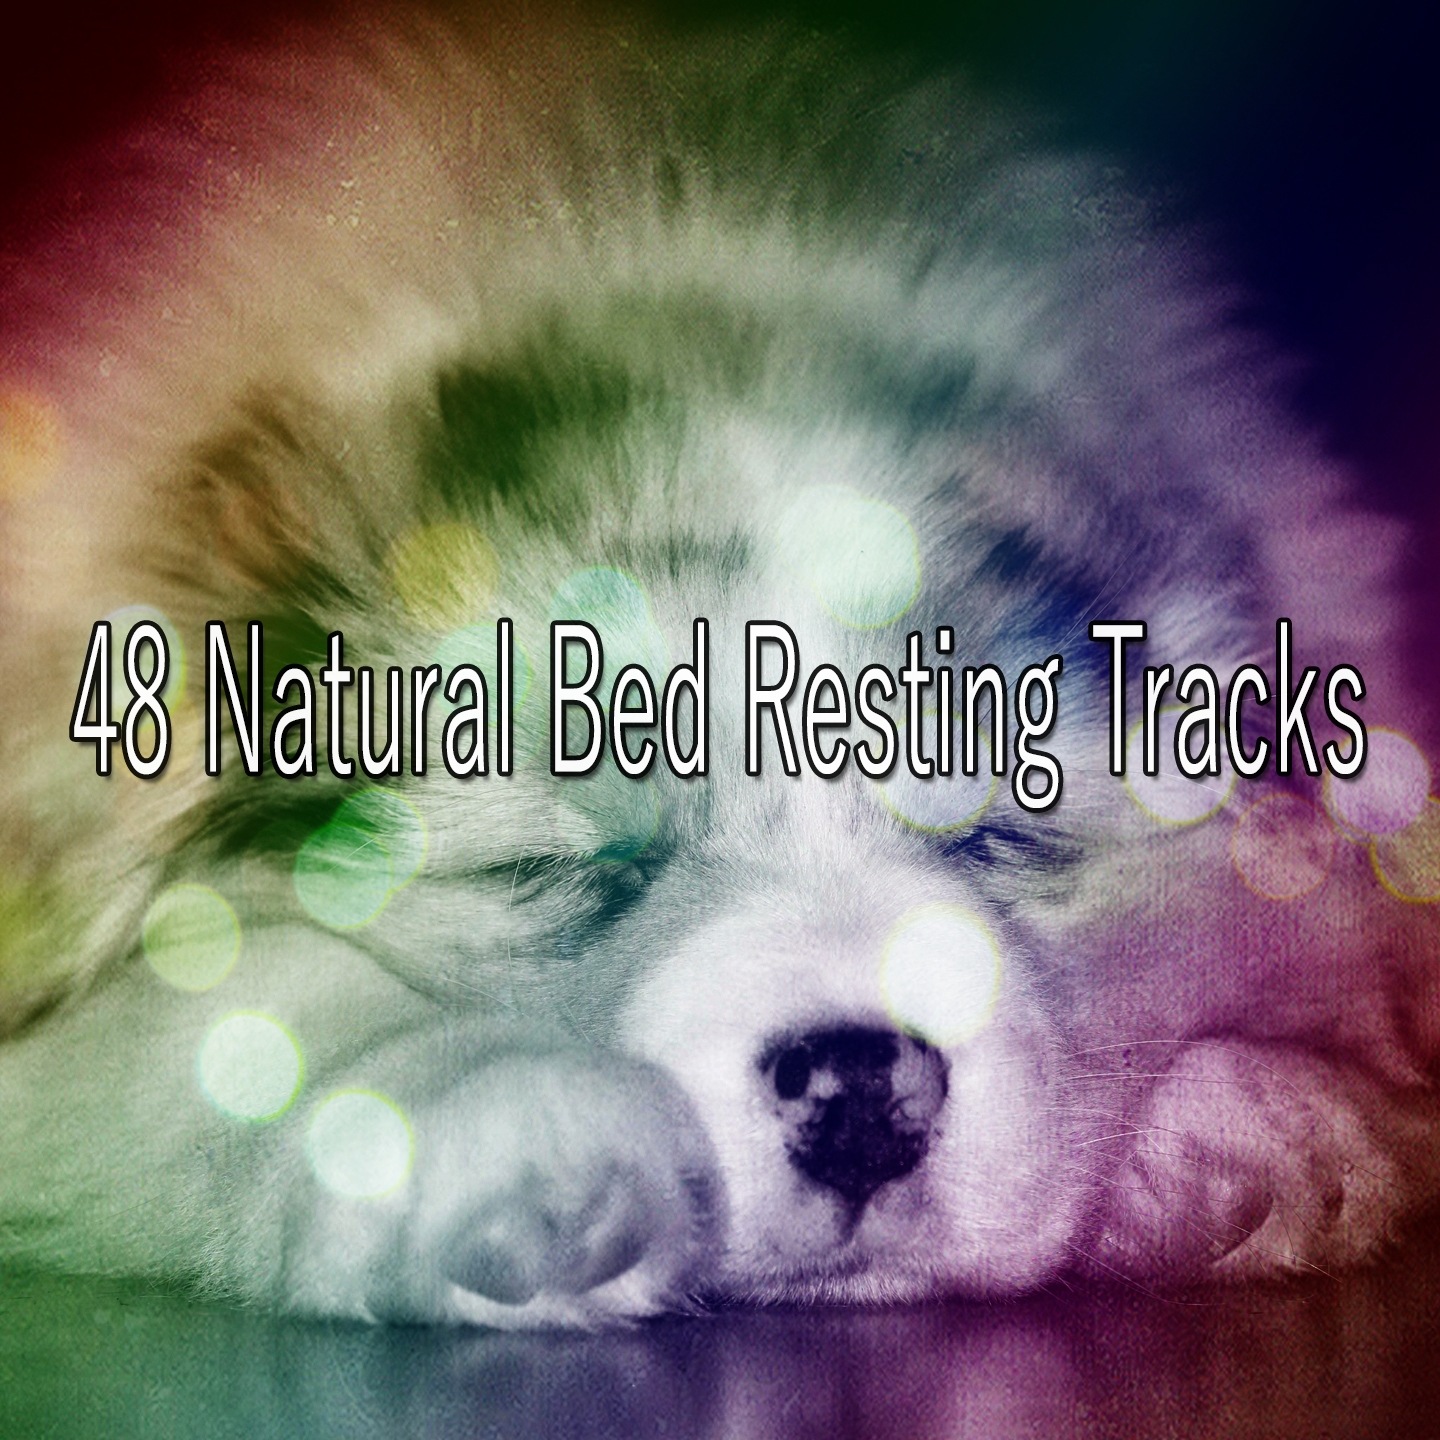 48 Natural Bed Resting Tracks